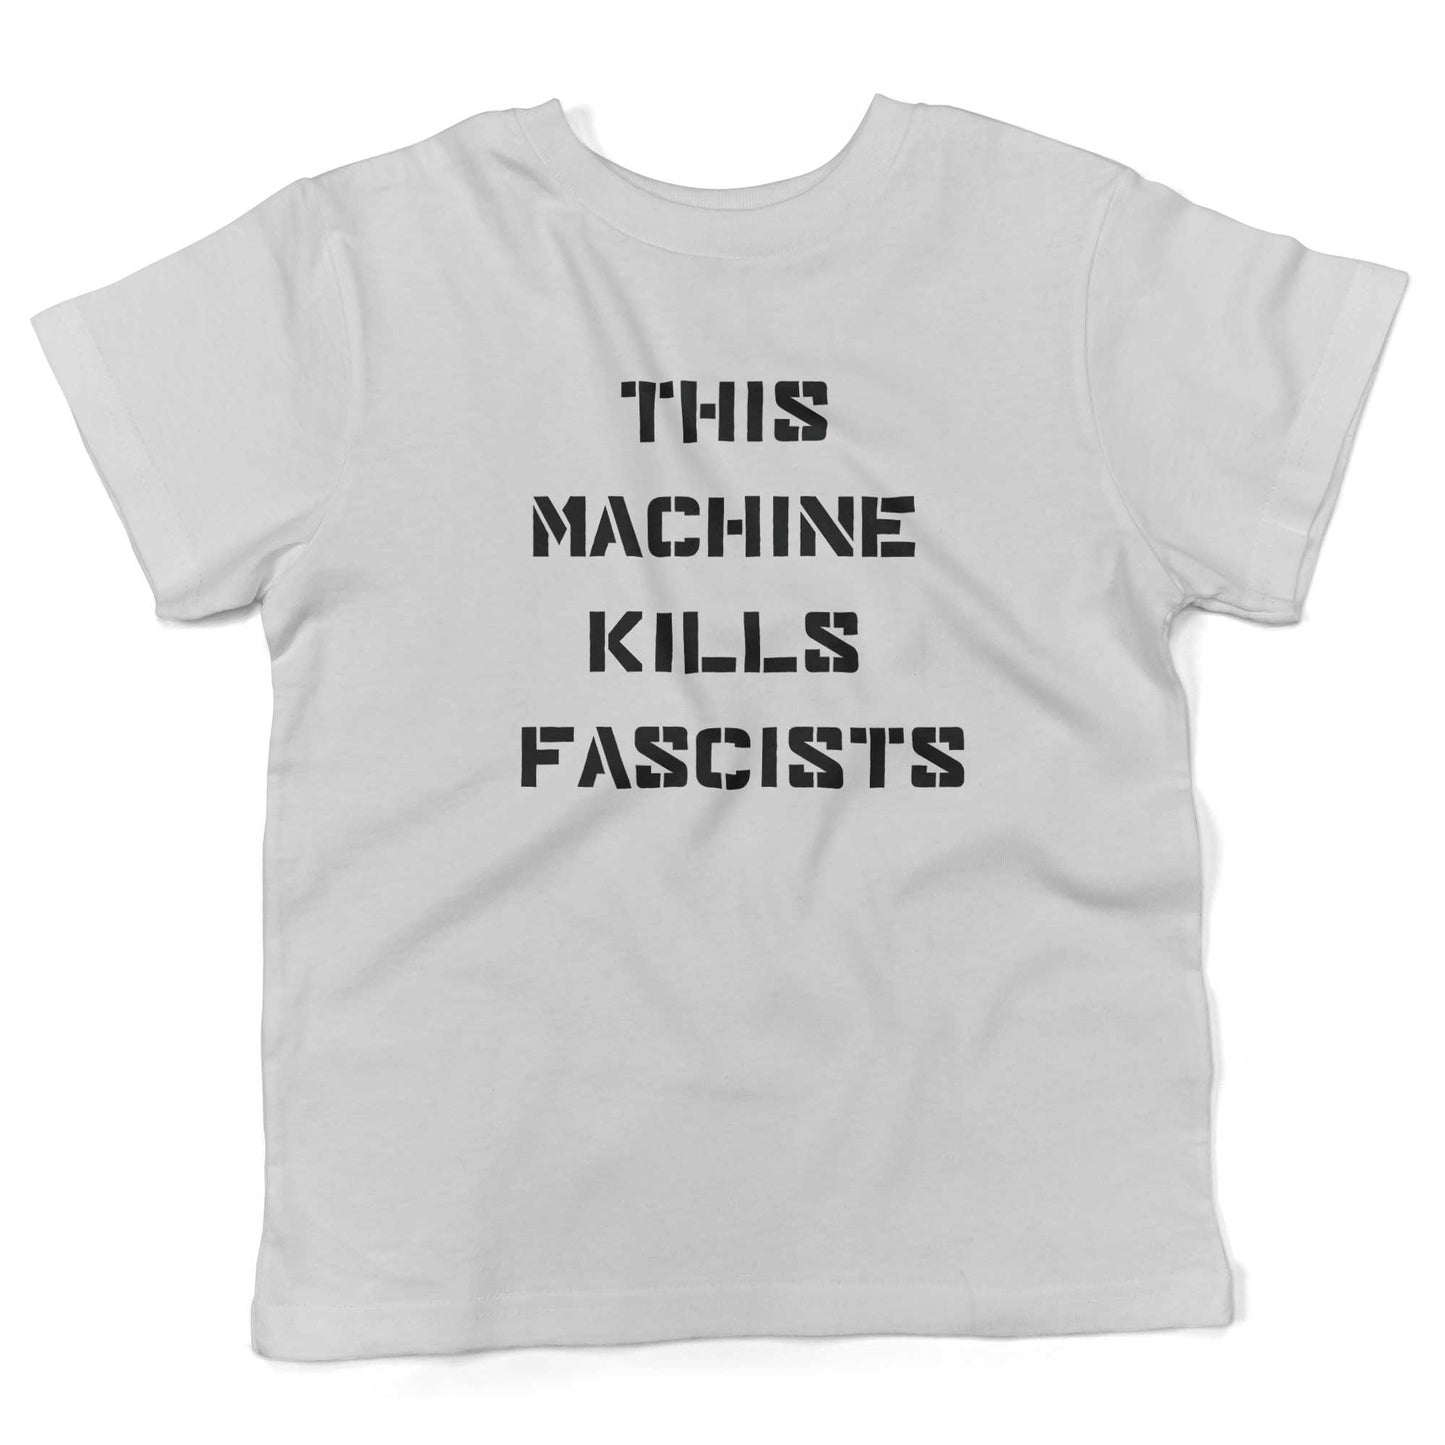 This Machine Kills Fascists Toddler Shirt-White-2T